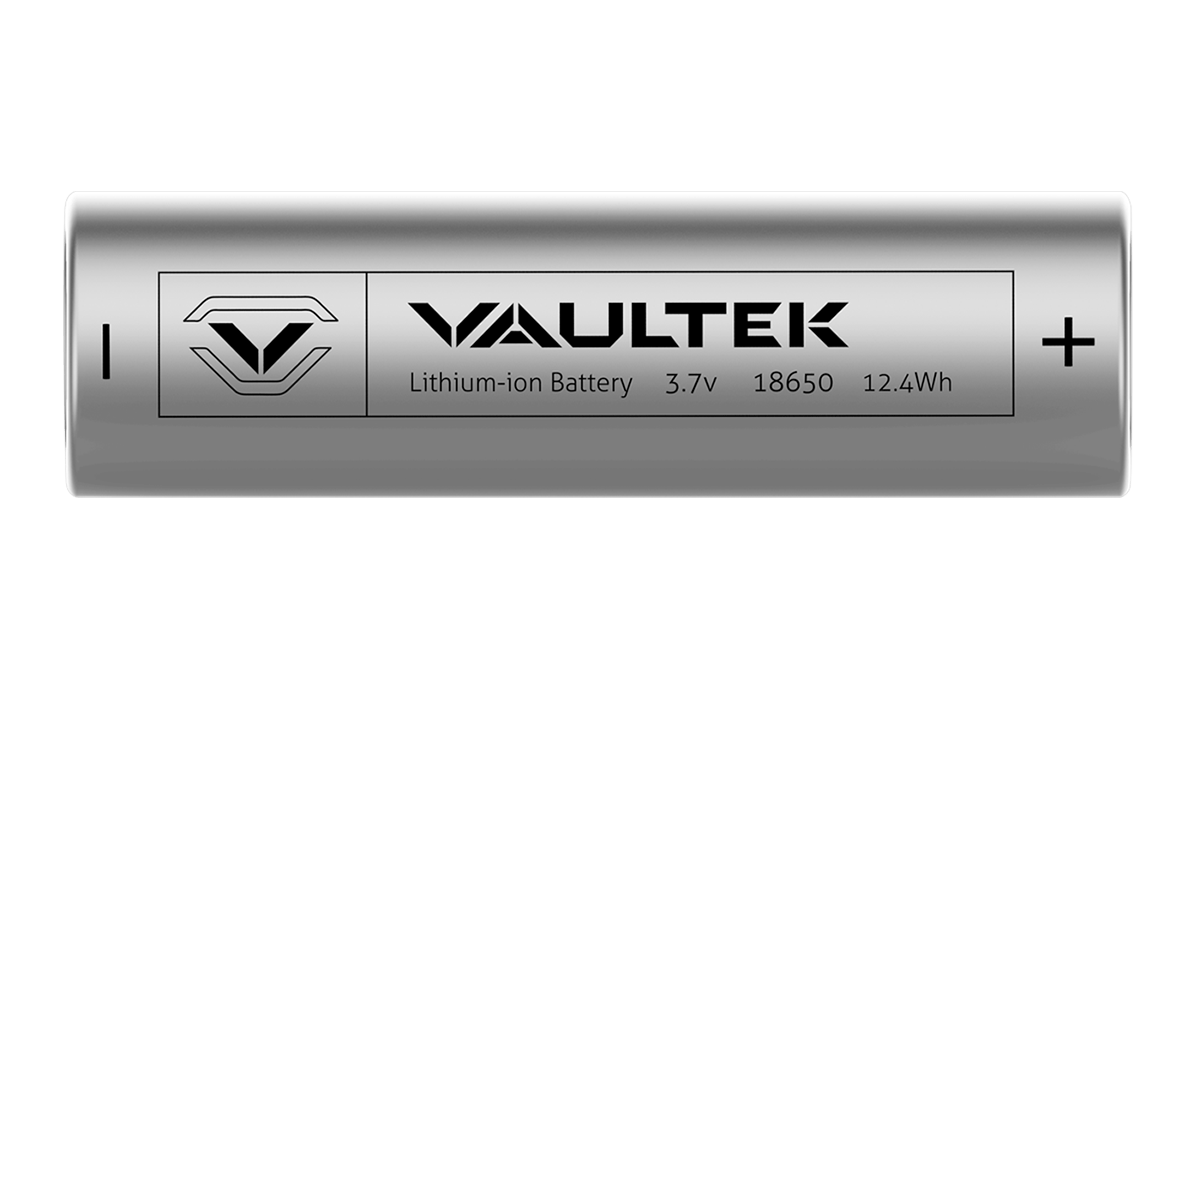 Accessories - Vaultek VP3000 High Capacity Lithium-Ion Battery Upgrade